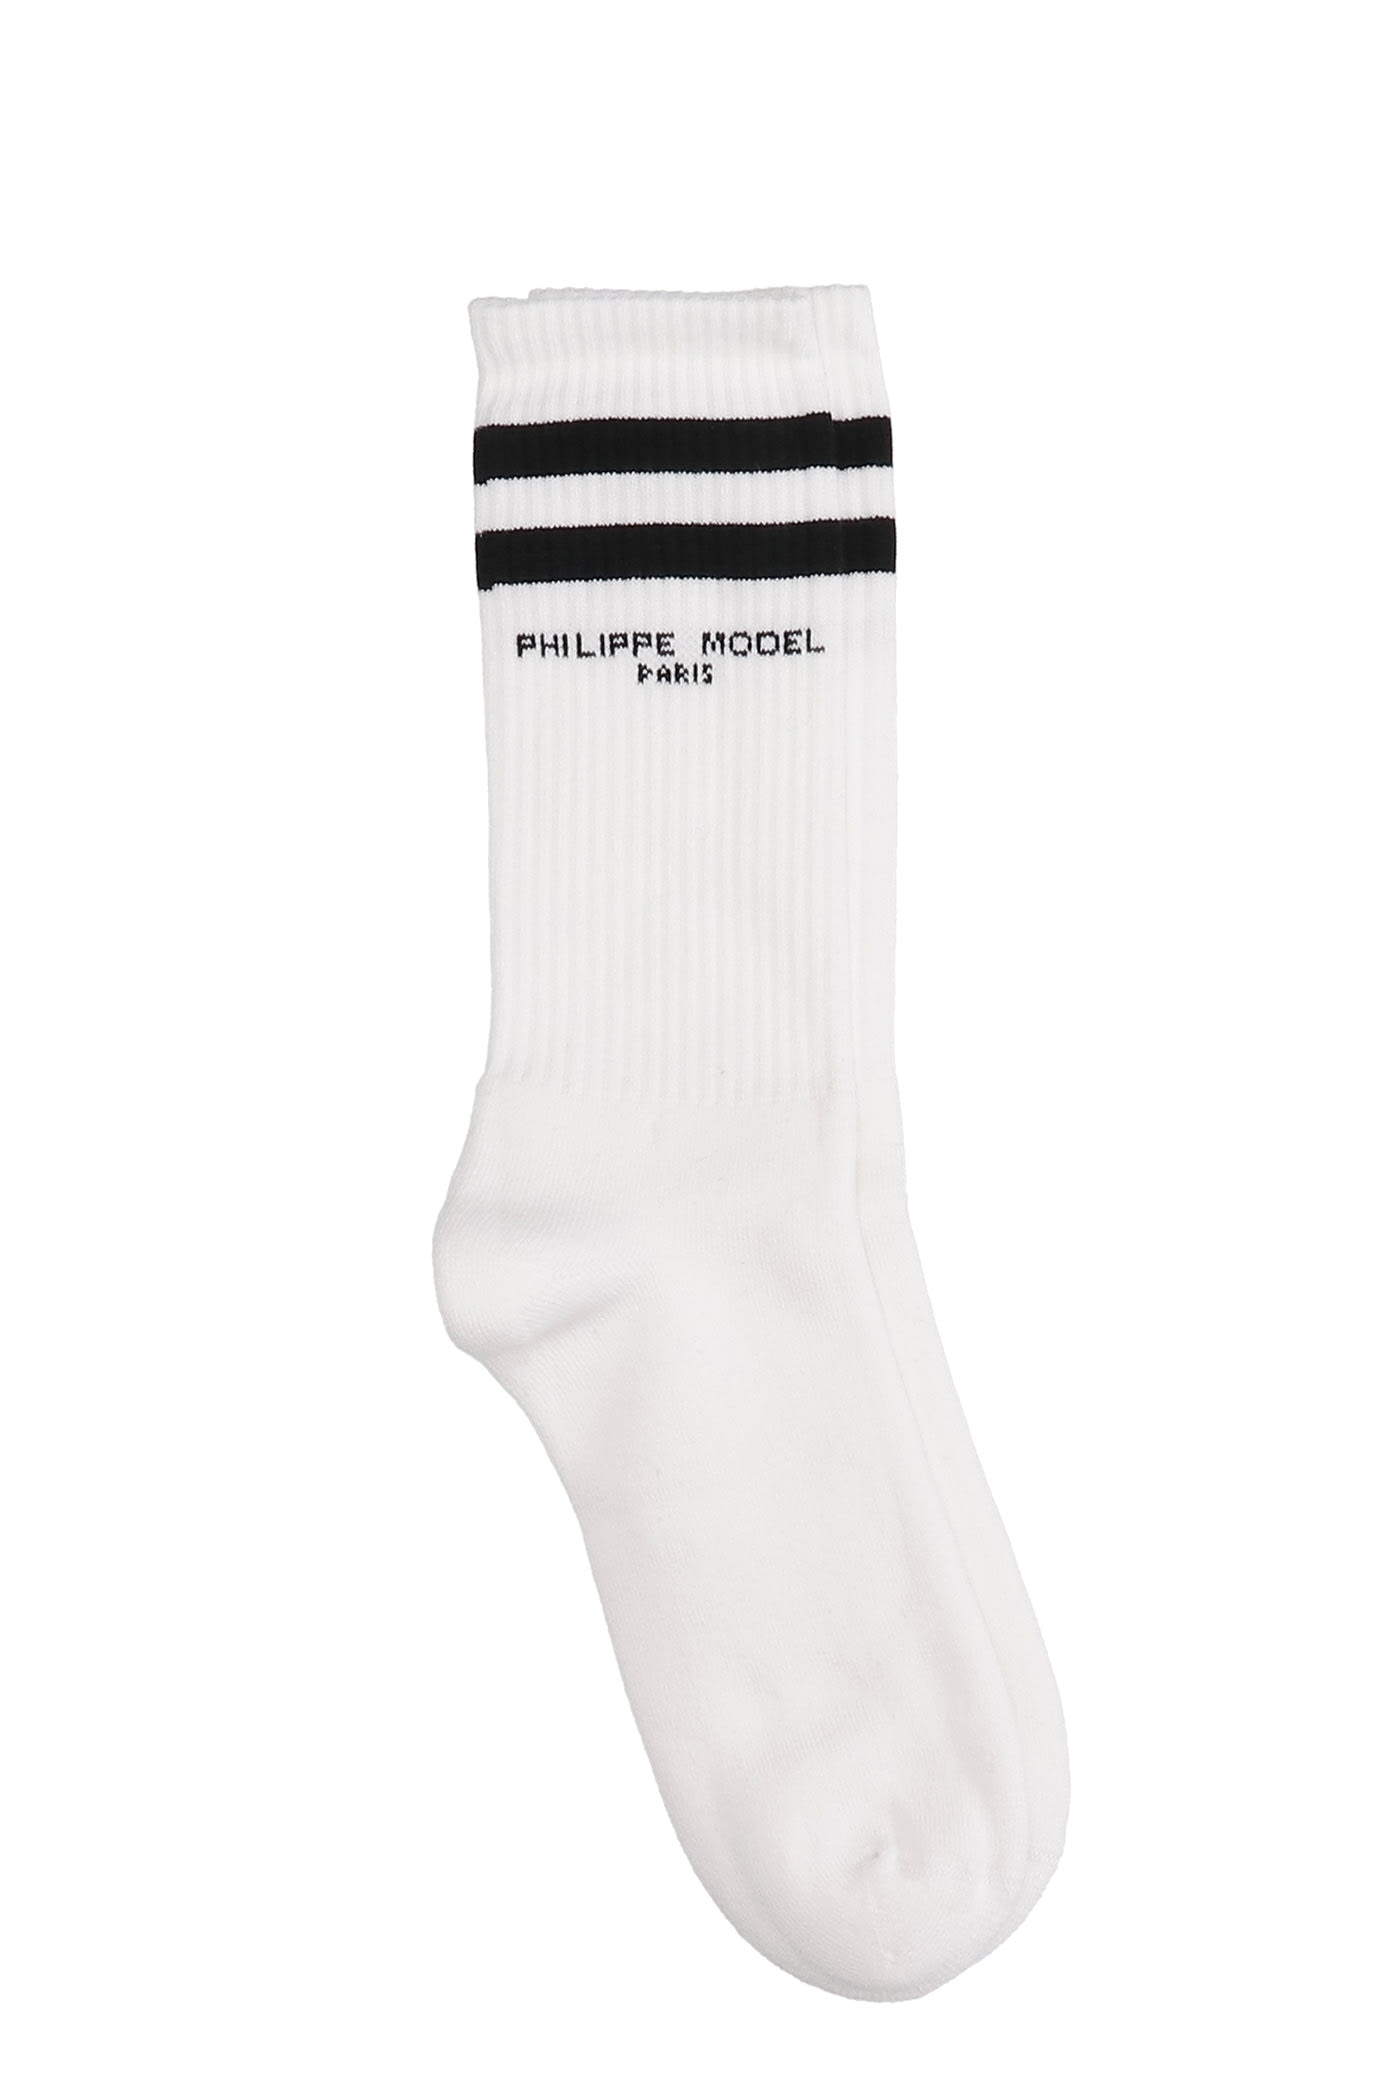 Philippe Model Chaussette Antoine Socks In White Cotton